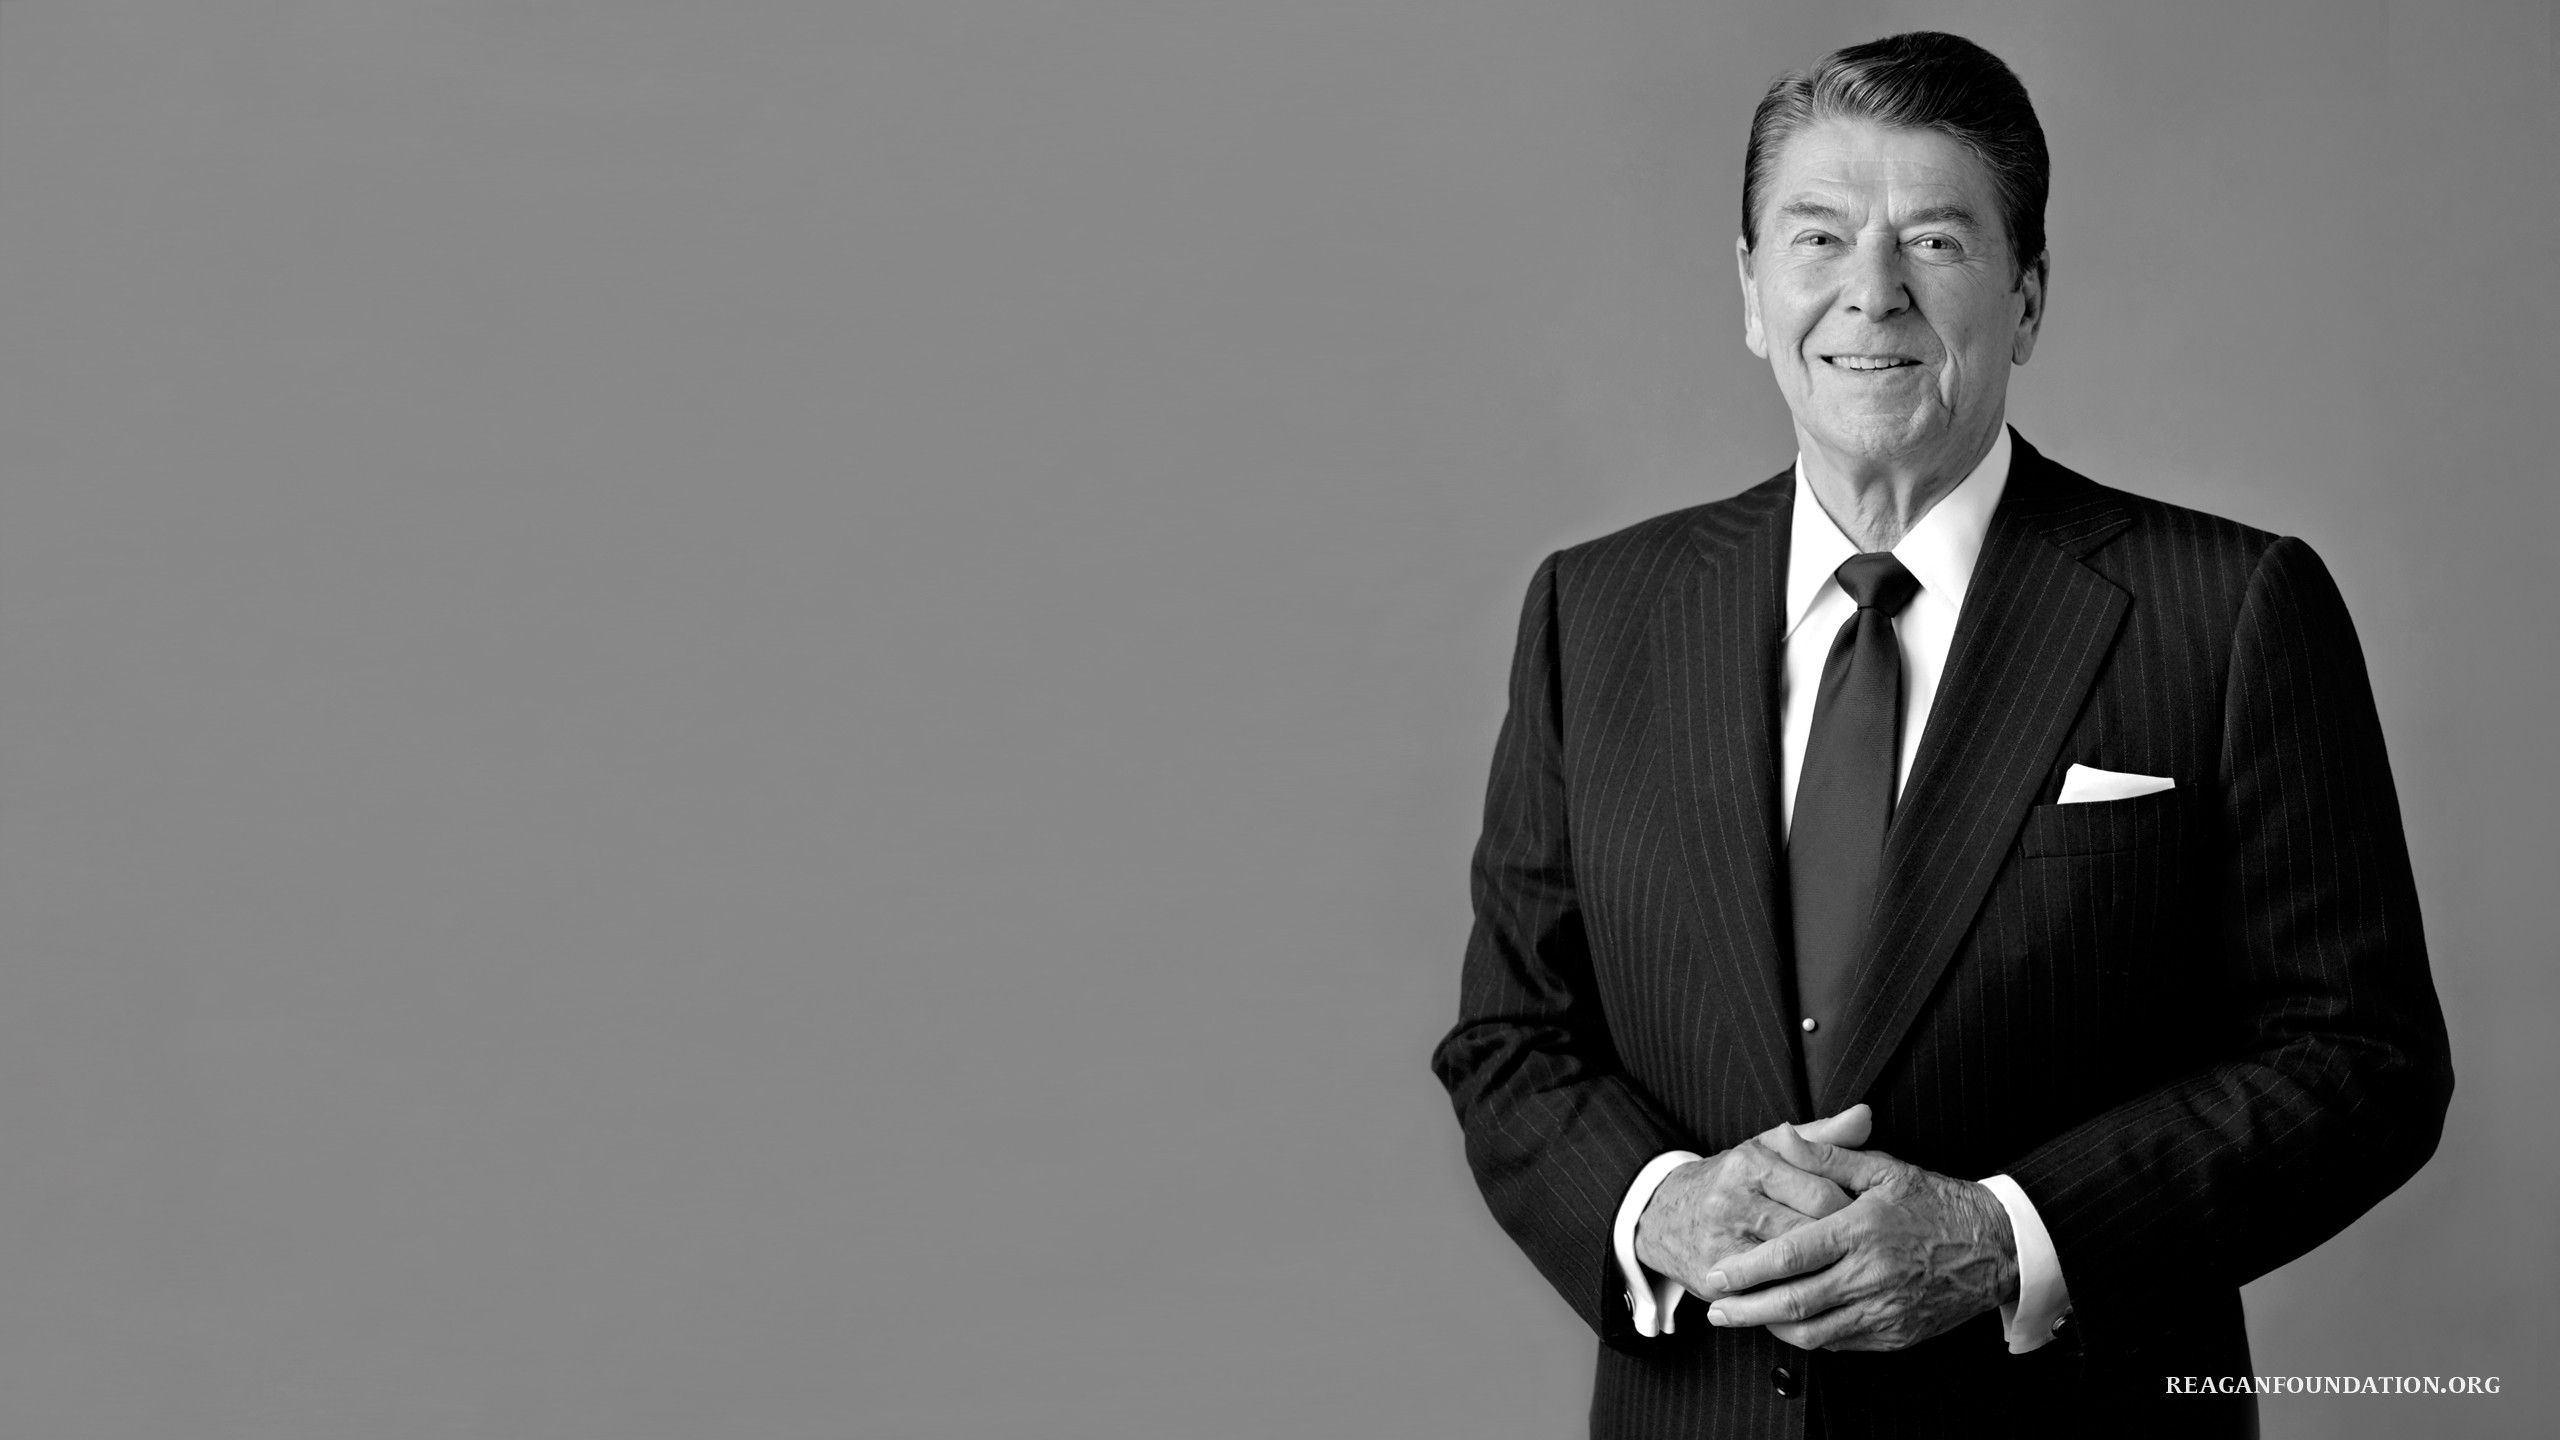 2560x1440 Ronald Reagan Presidential